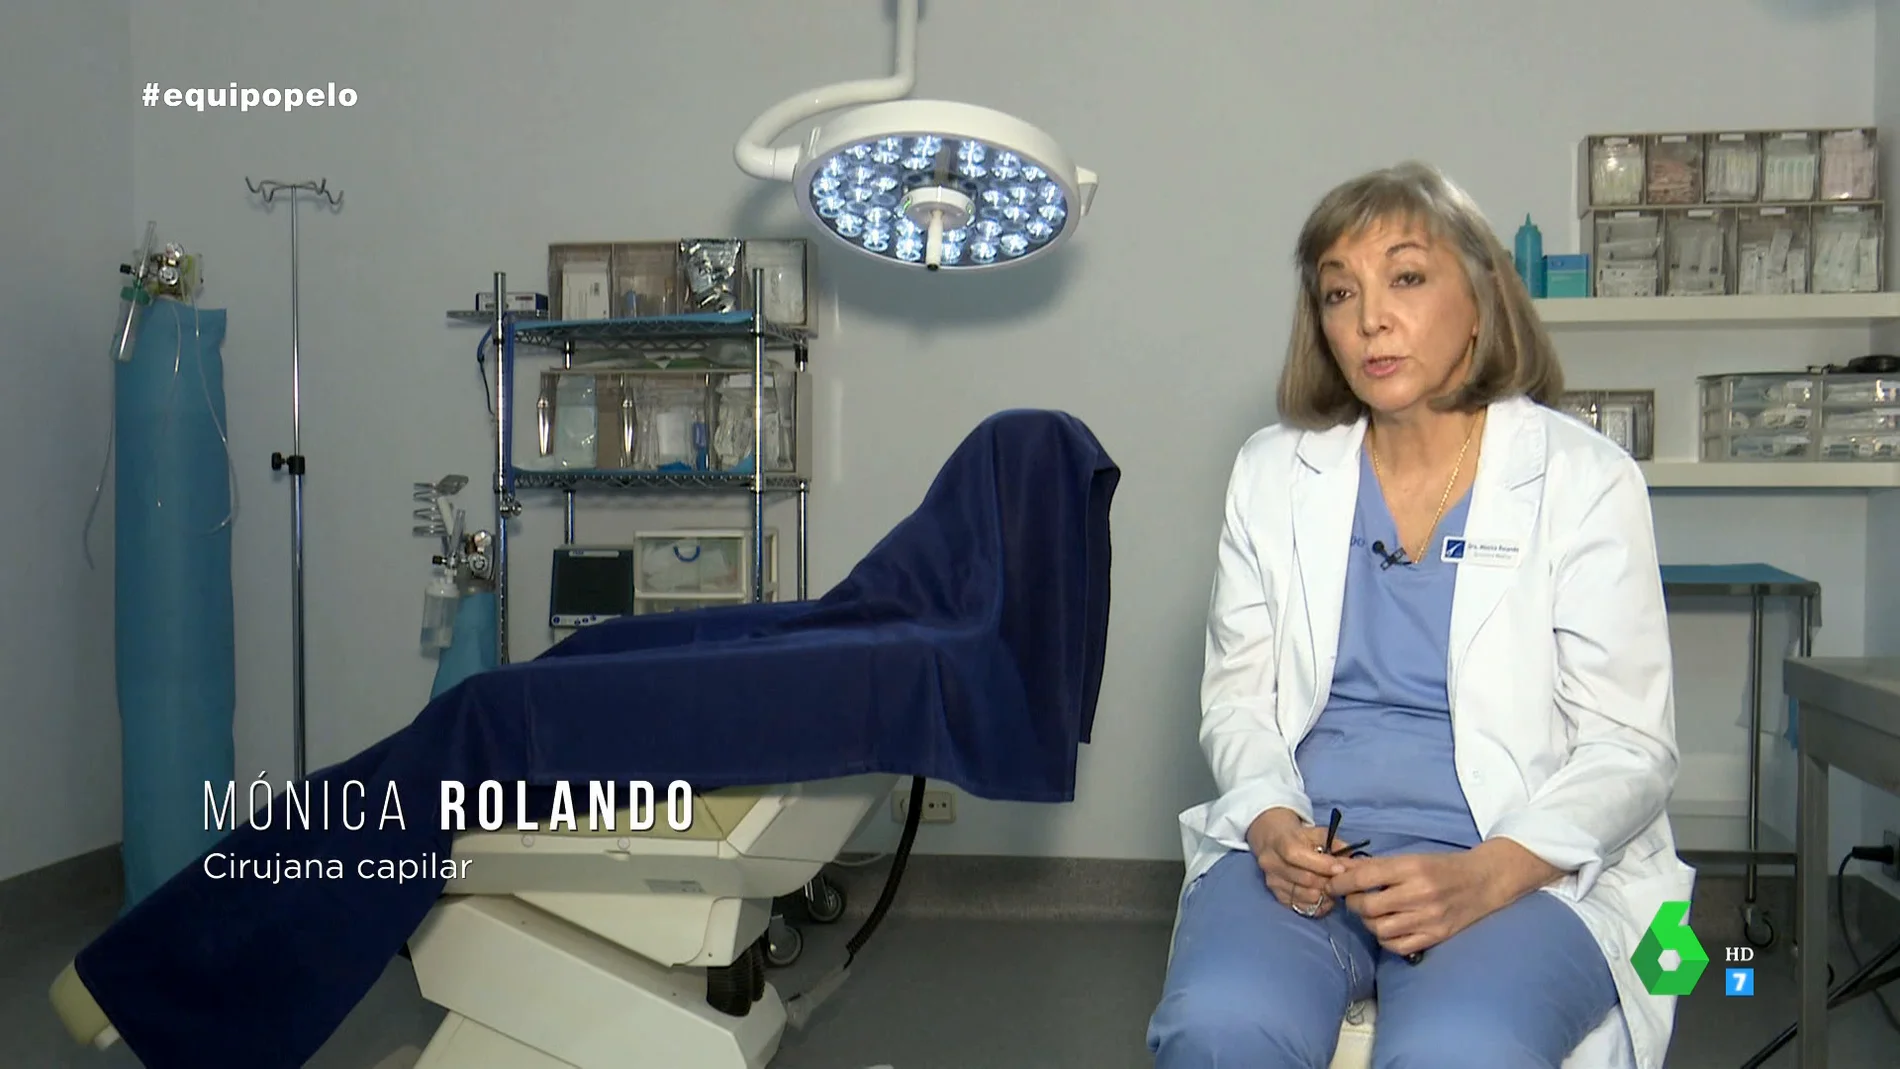 La cirujana que hizo el trasplante de pelo a José Bono avisa sobre "la mala praxis"